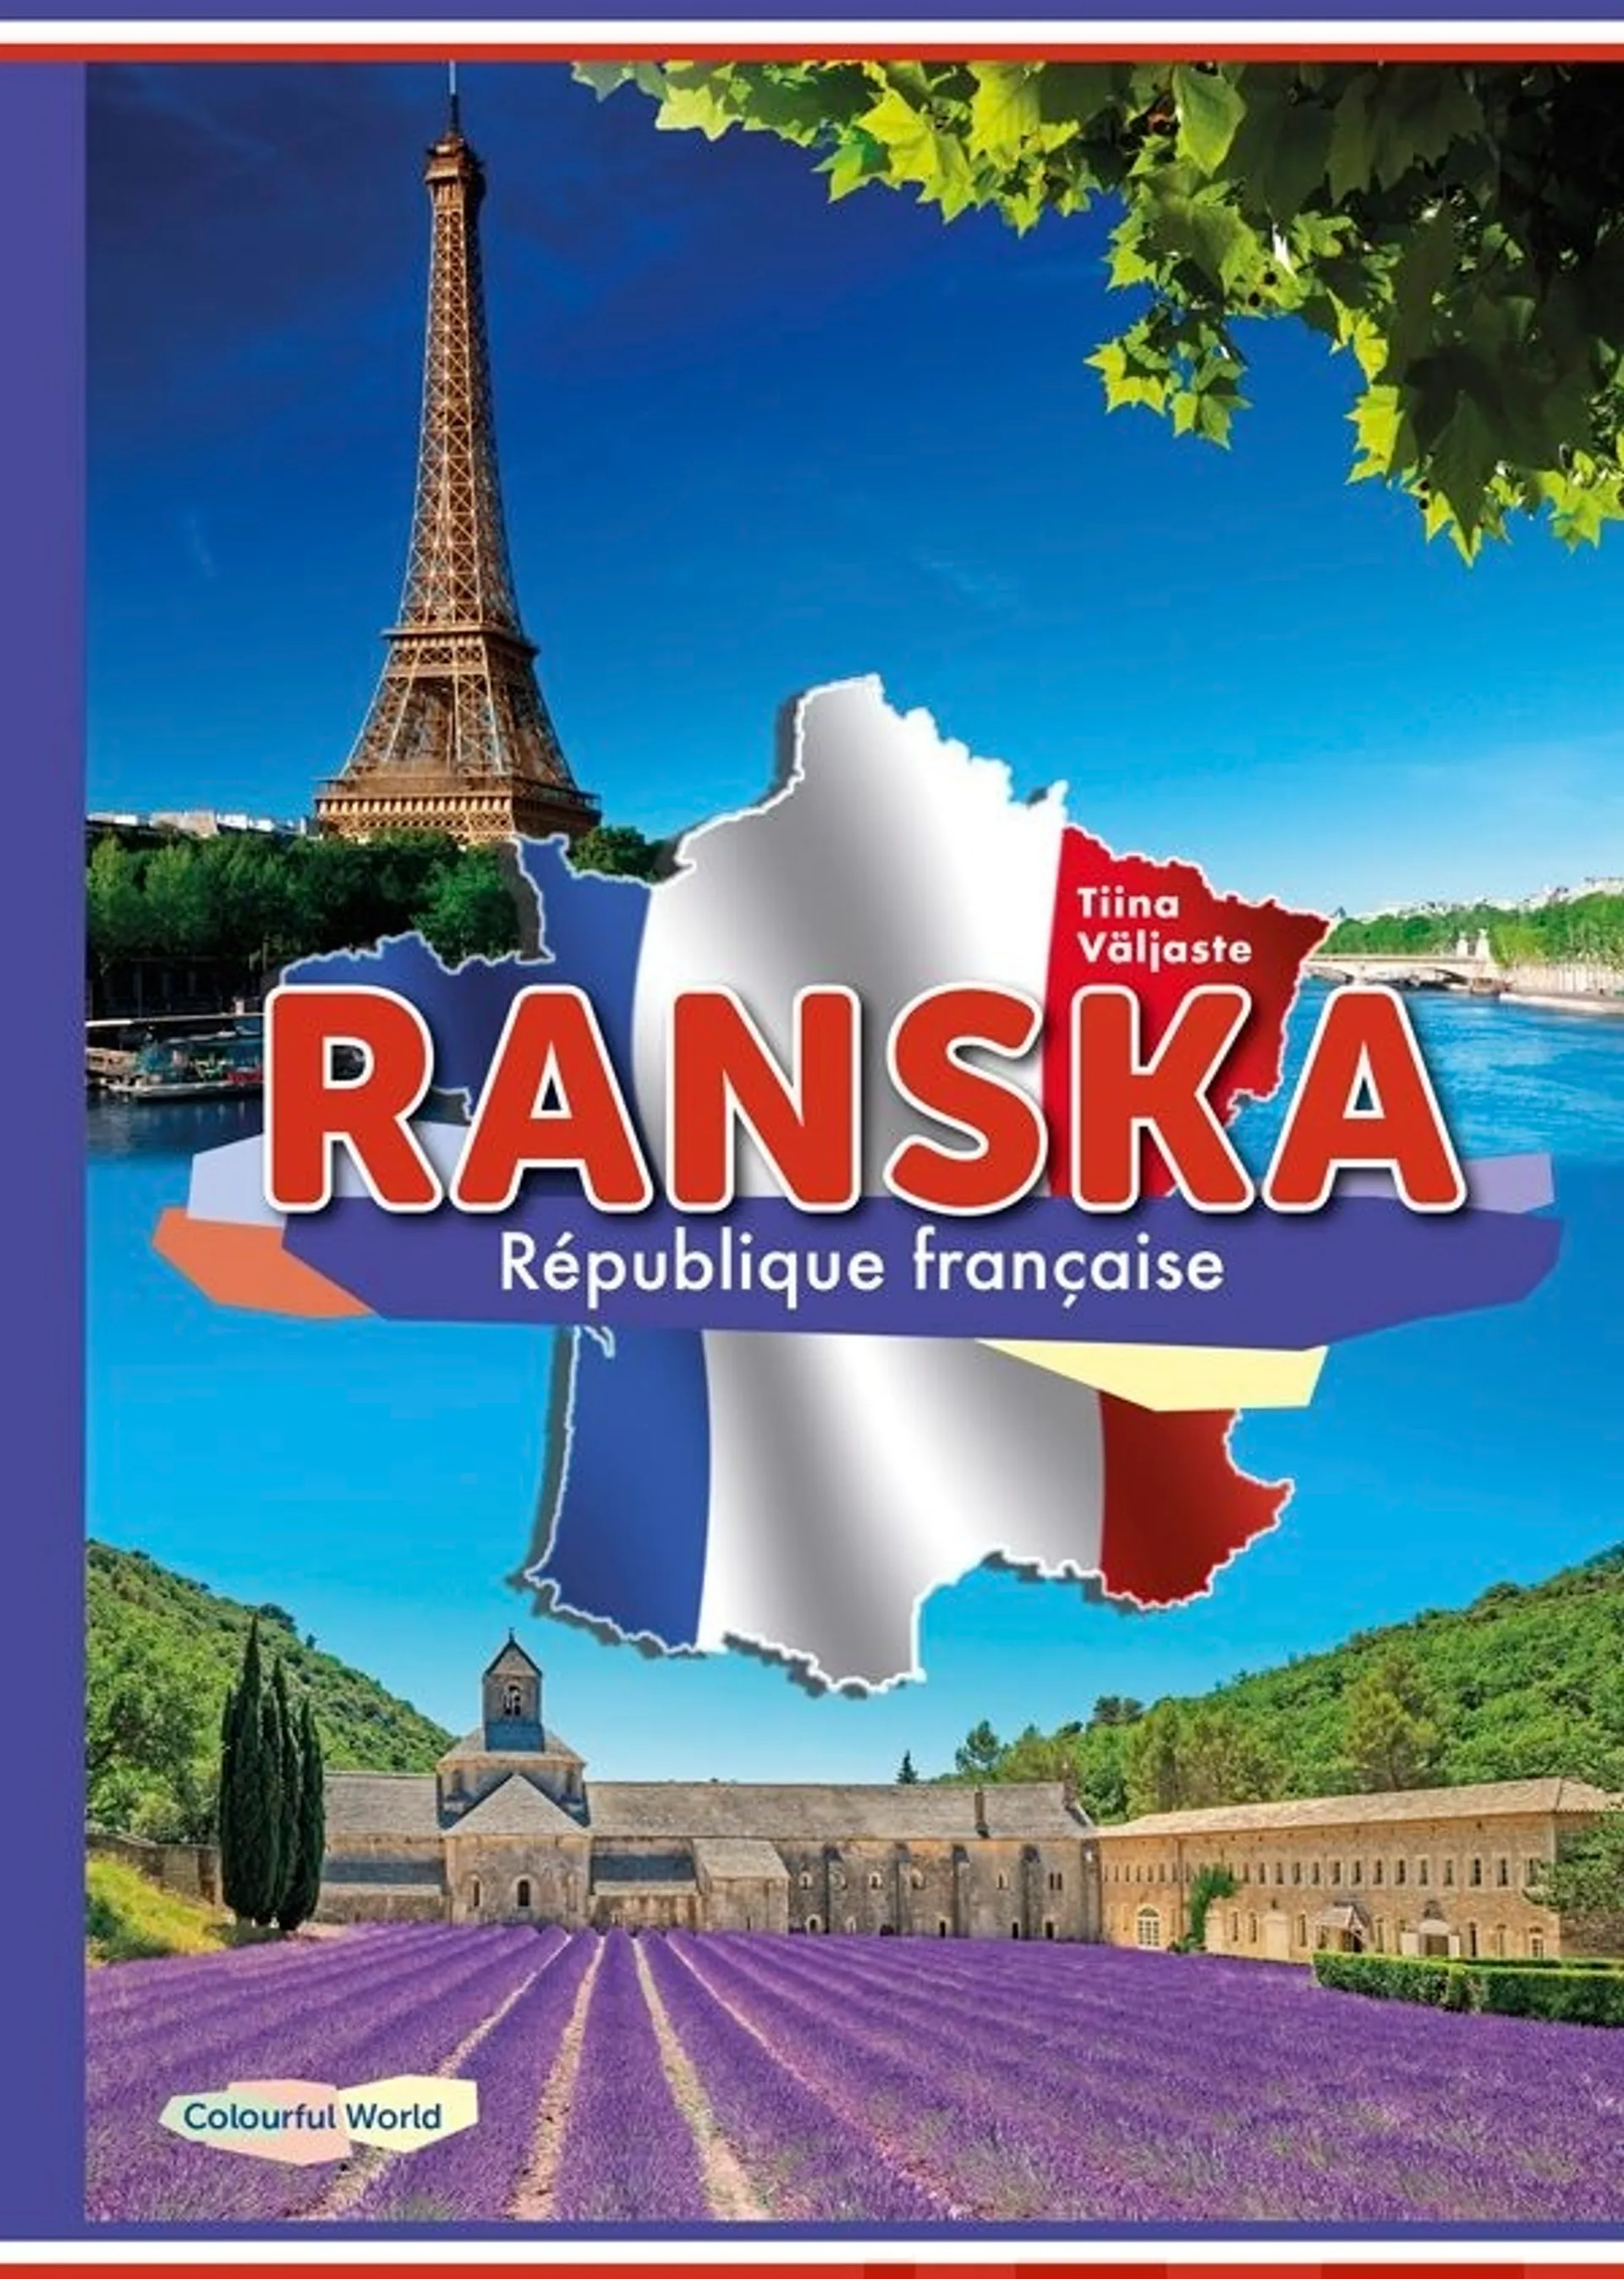 Väljaste, RANSKA - République Française